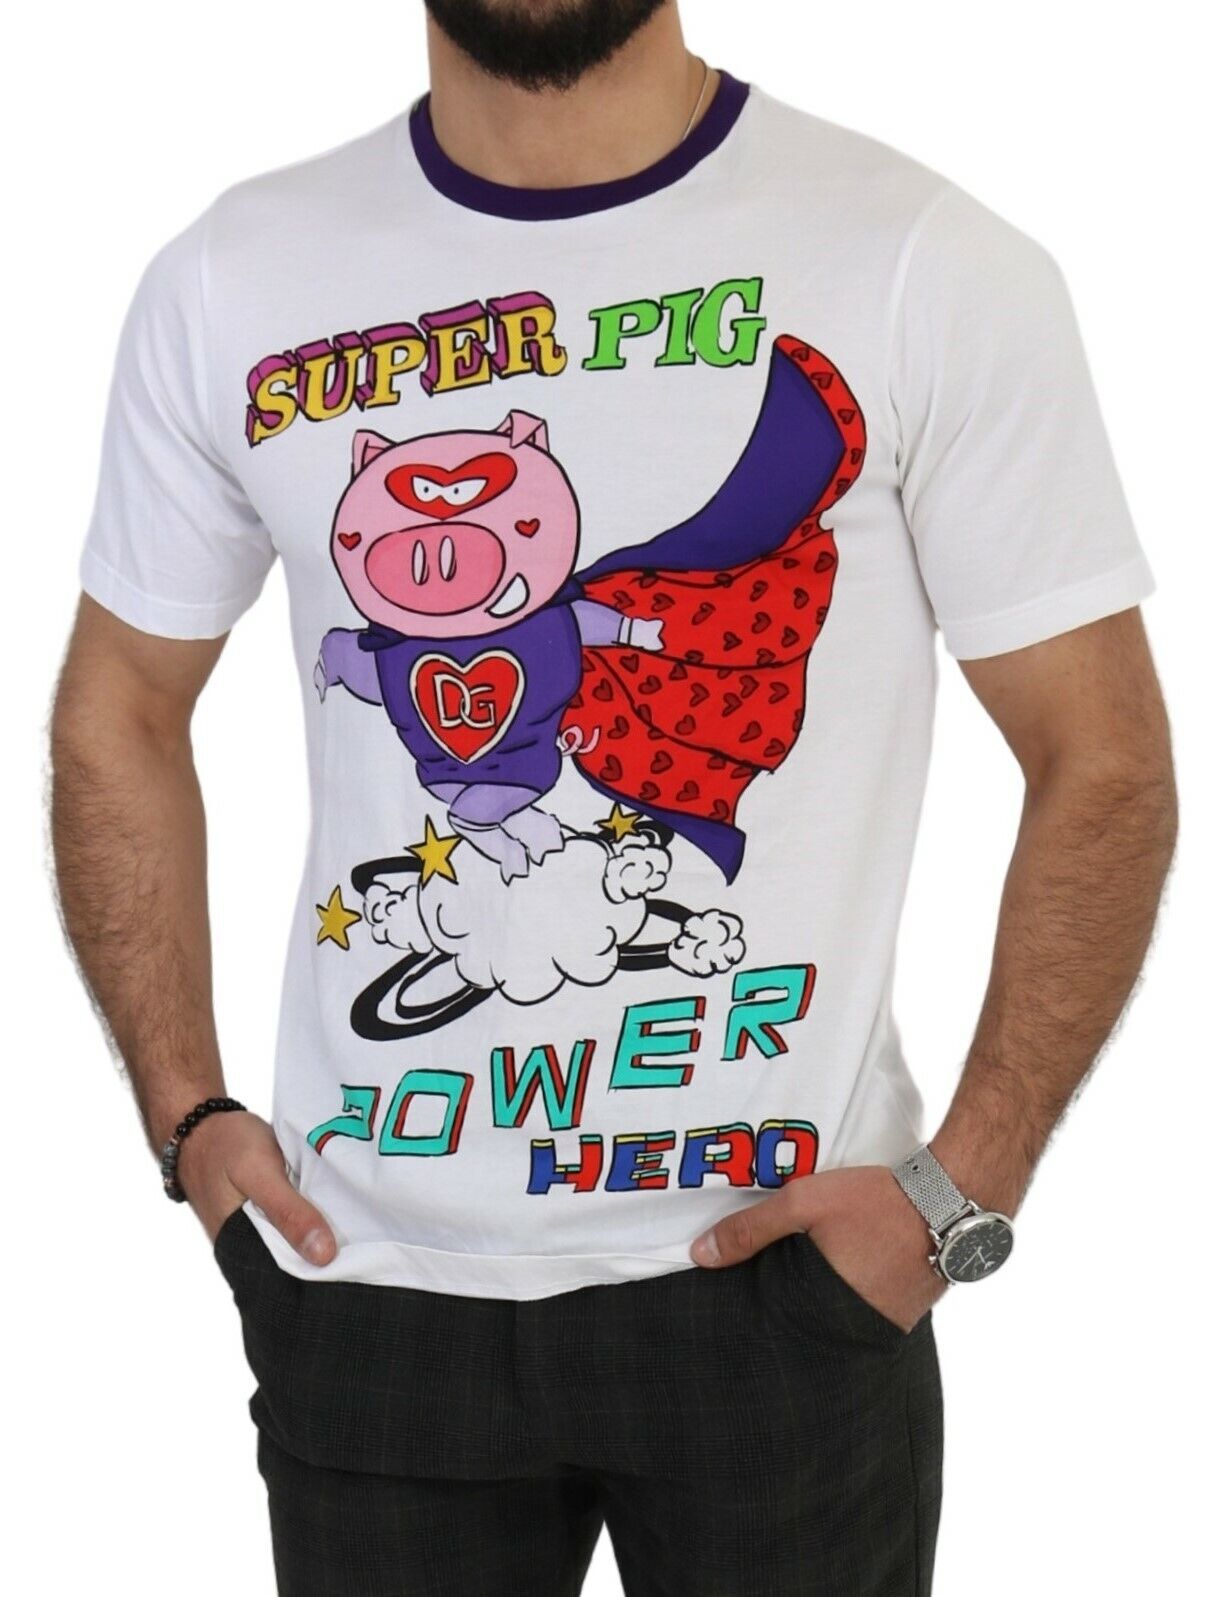 Dolce & Gabbana White Cotton Top Super Power Pig T-shirt